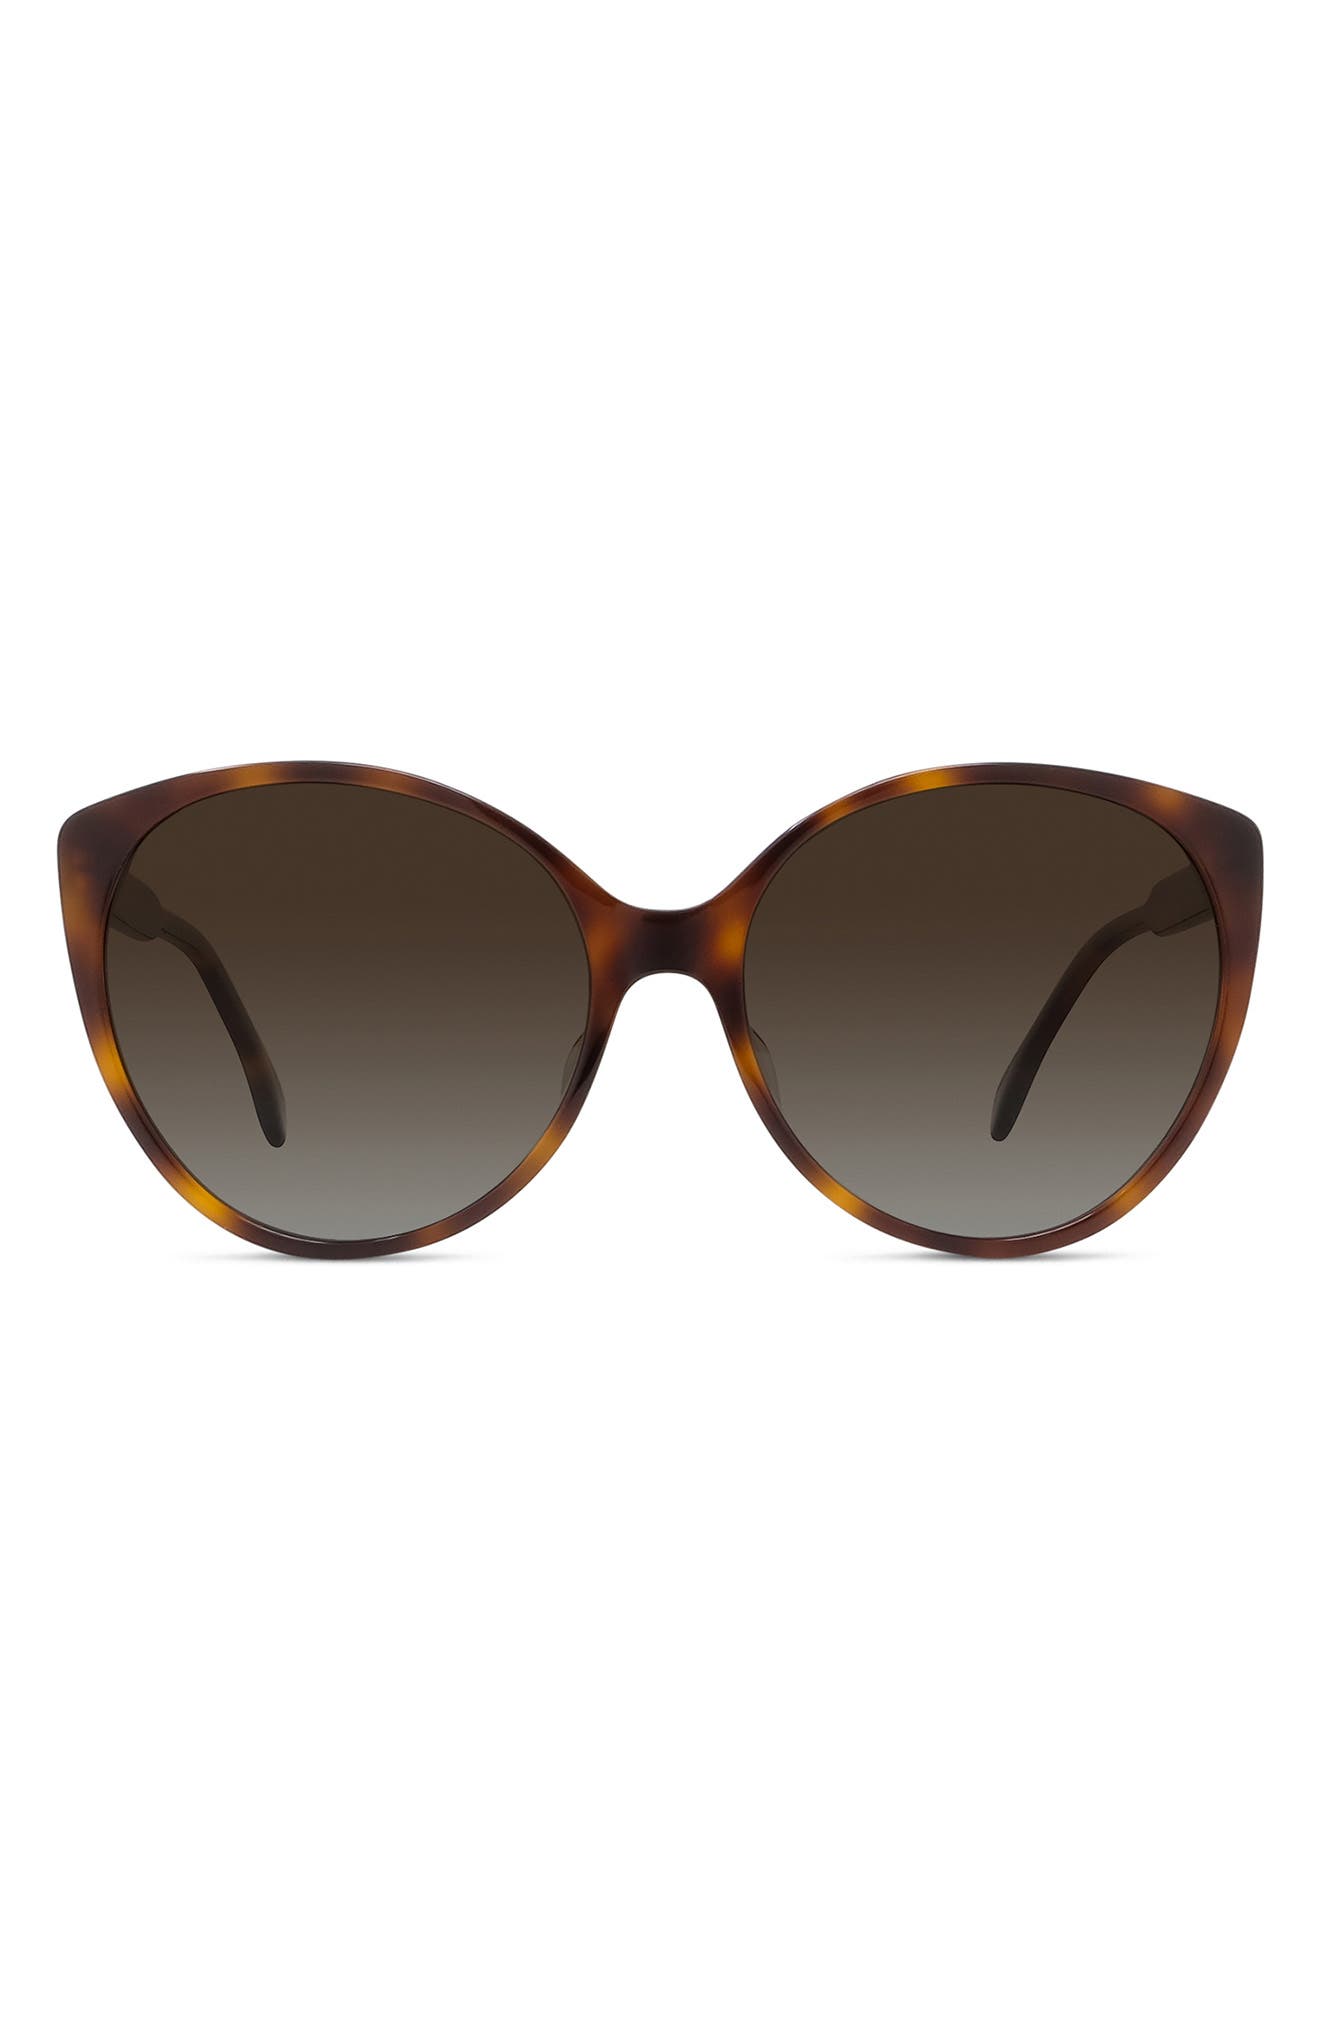 Fendi Fine 59mm Cat Eye Sunglasses in Blonde Havana /Grad Roviex at Nordstrom